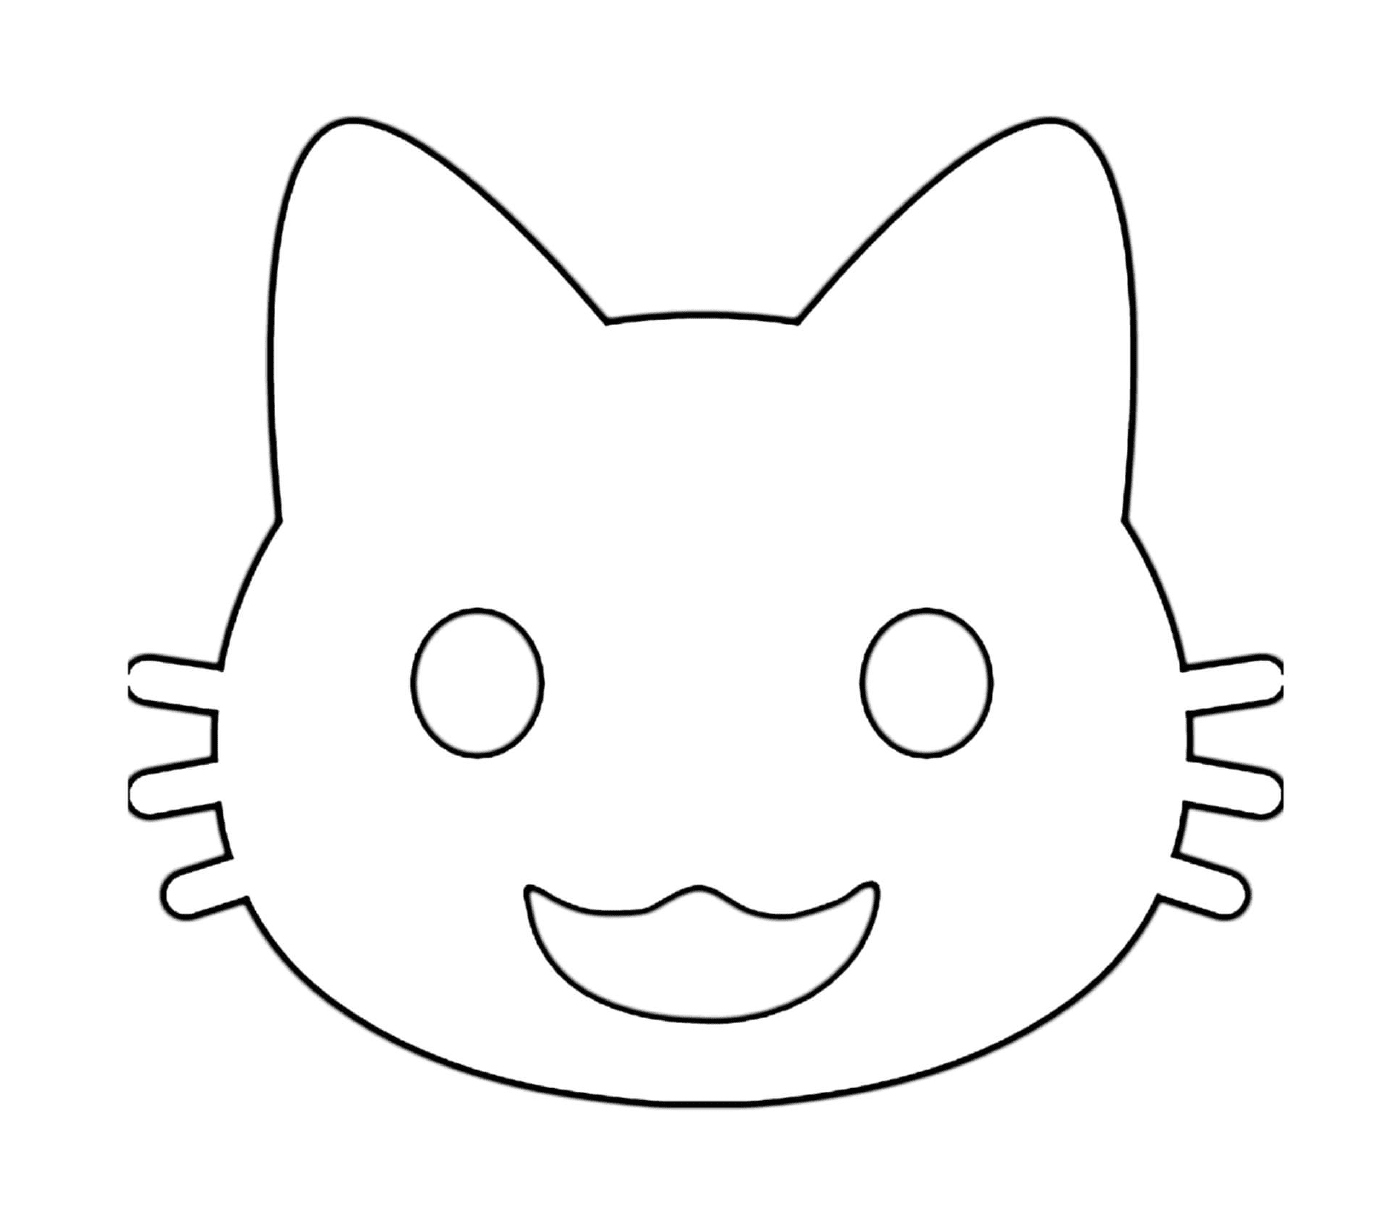  A smiling cat 